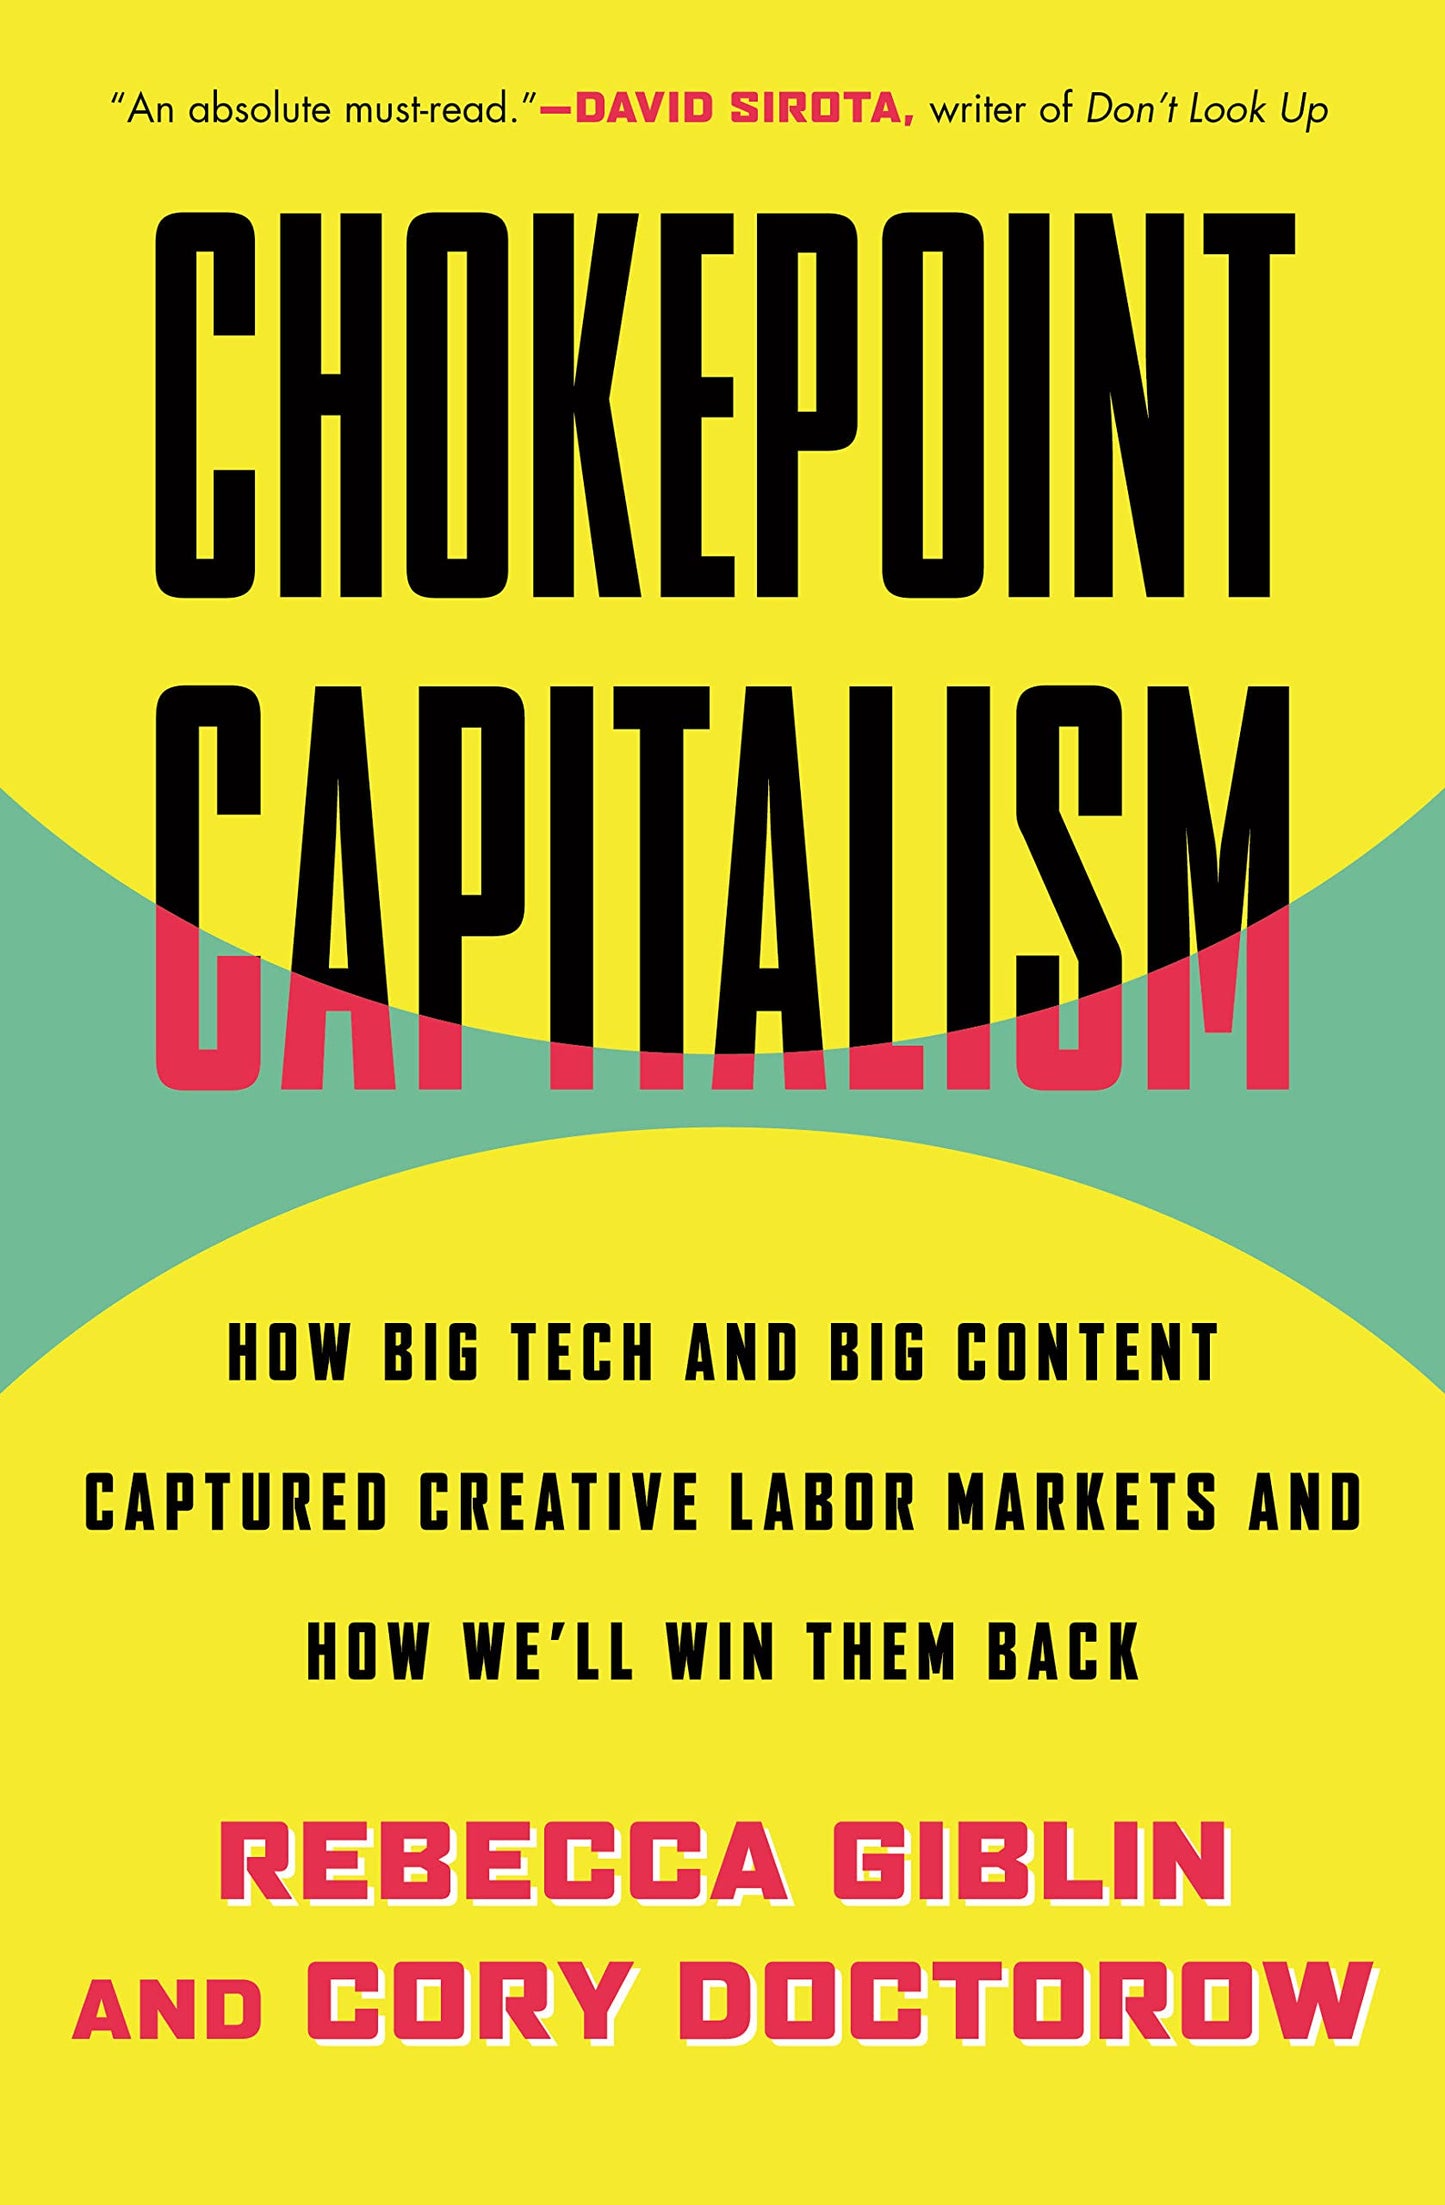 Chokepoint Capitalism, by Rebecca Giblin & Corey Doctorow